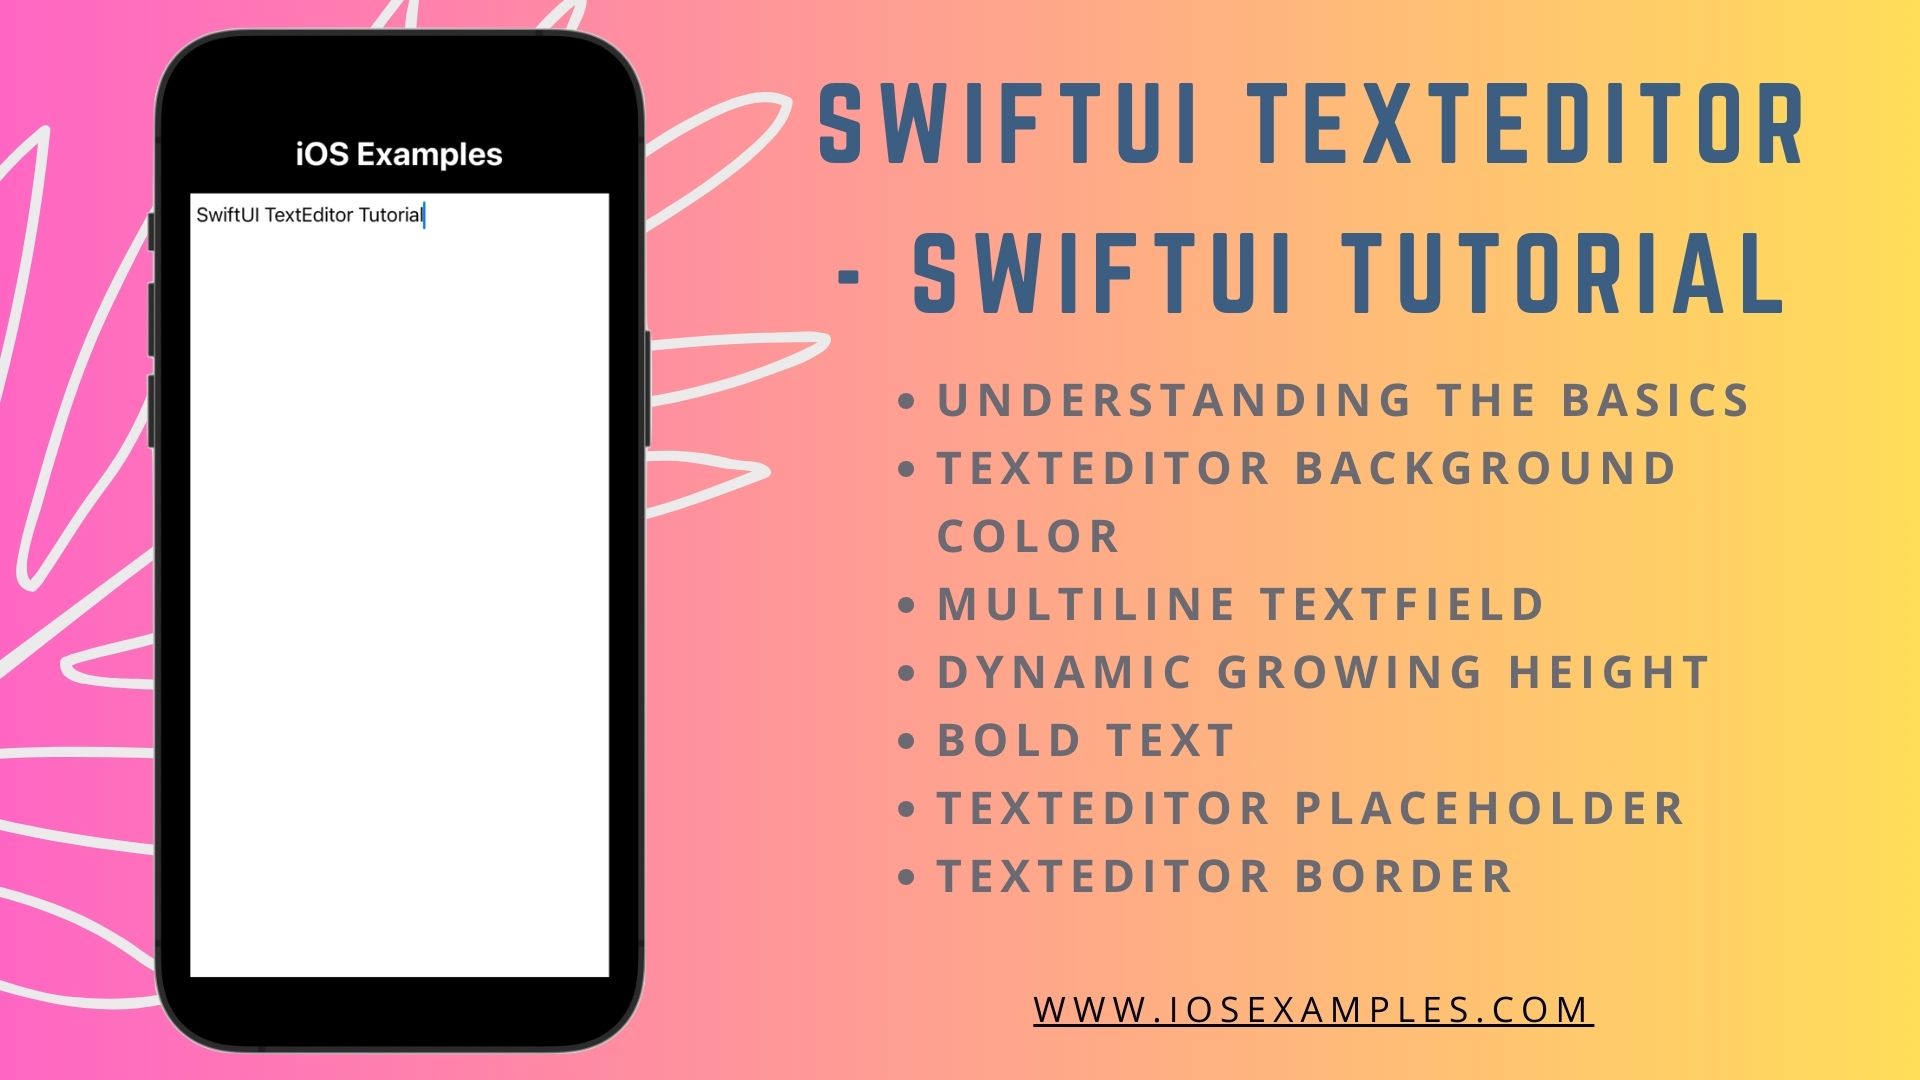 SwiftUI TextEditor -Swiftui tutorial